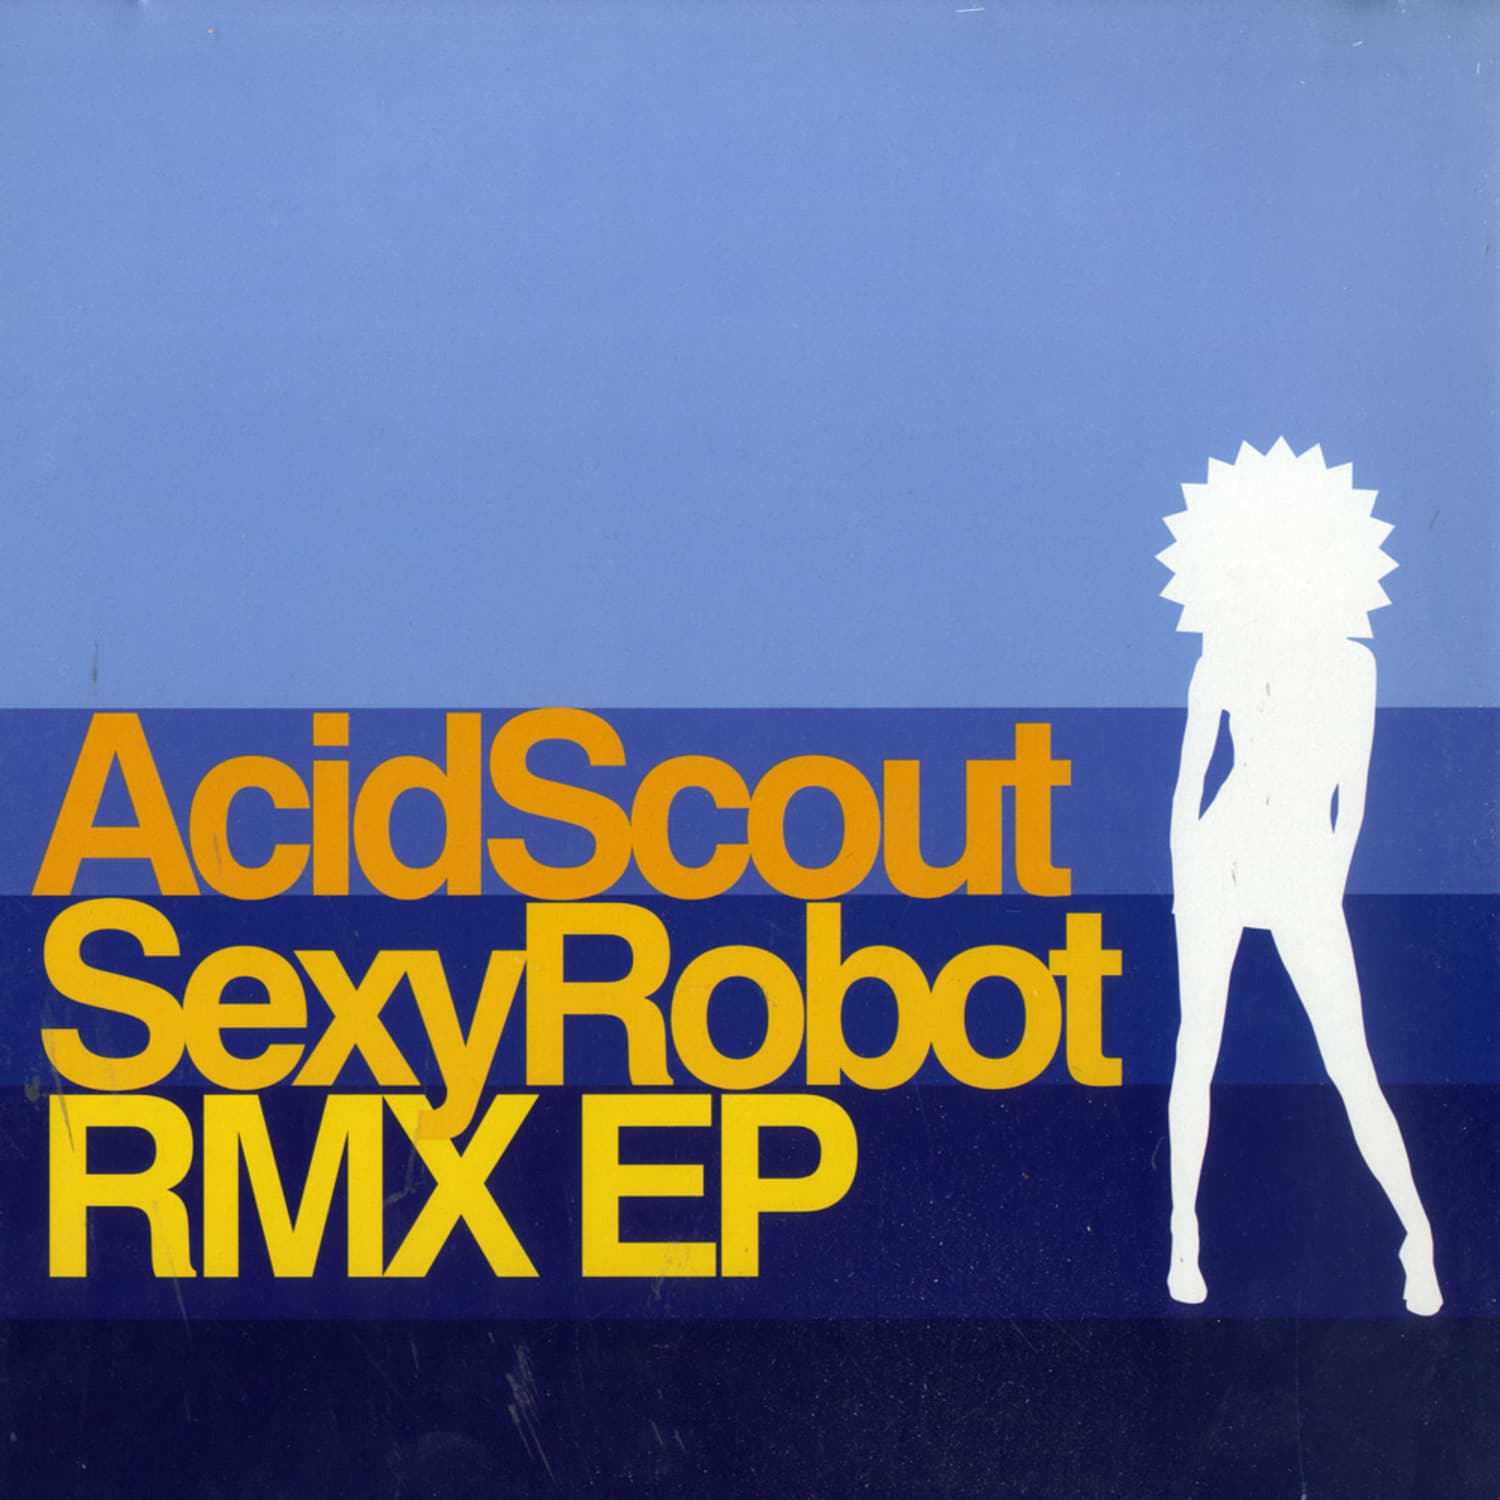 Acid Scout - SEXY ROBOT